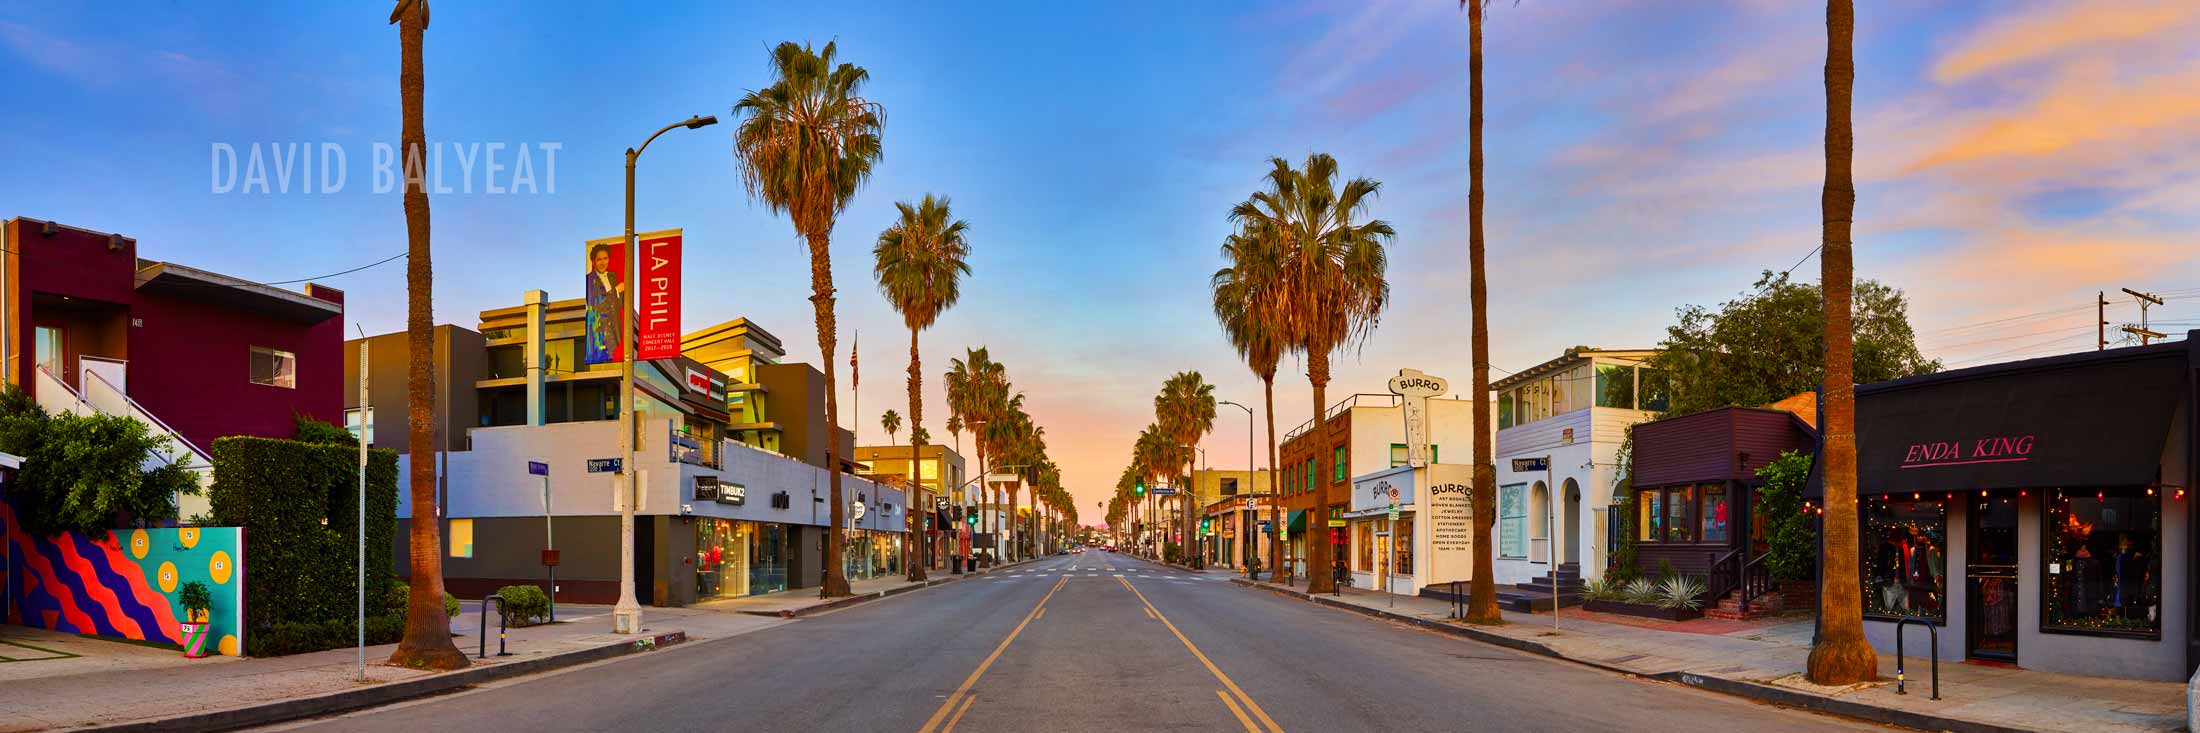 Abbot Kinney Venice Beach California sunrise panoramic professional cityscape photography